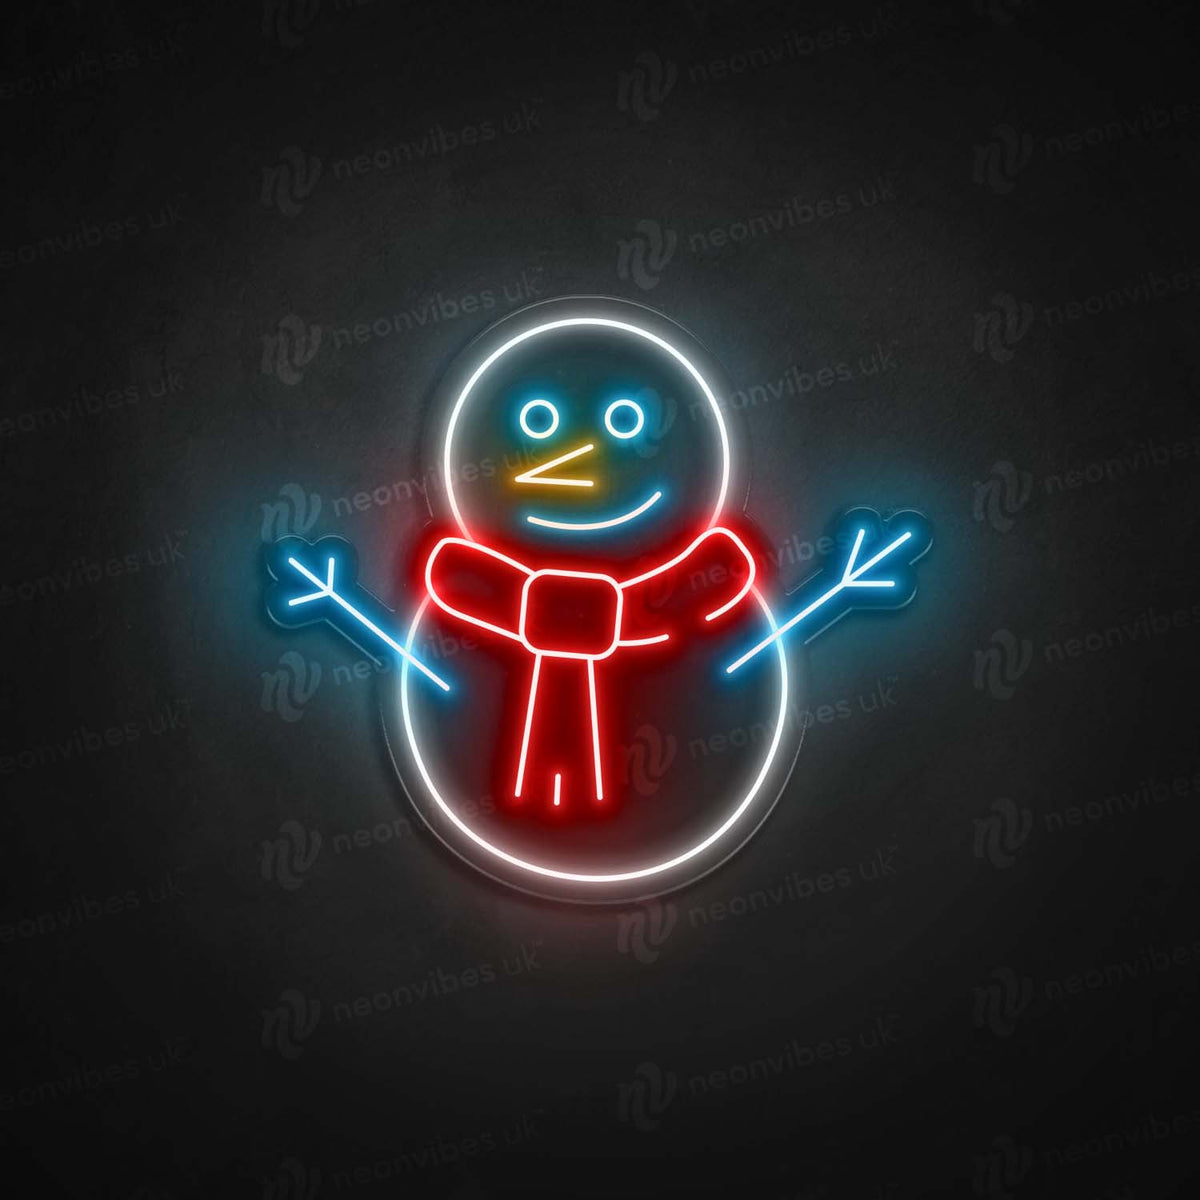 Snowman neon sign